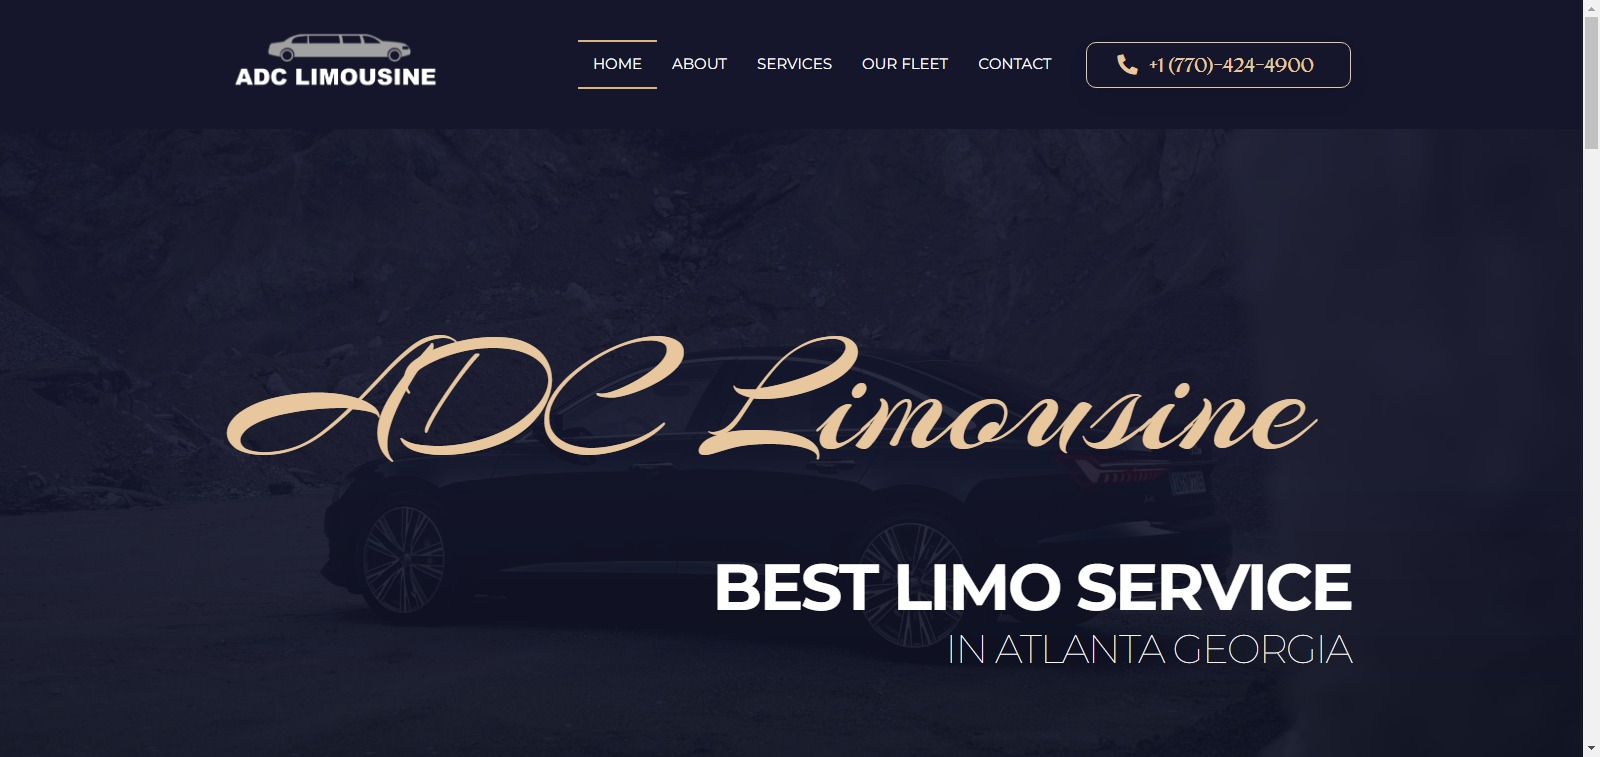 ADC LIMOUSINE – Excellent Limousine Services in Atlanta Georgia (1)